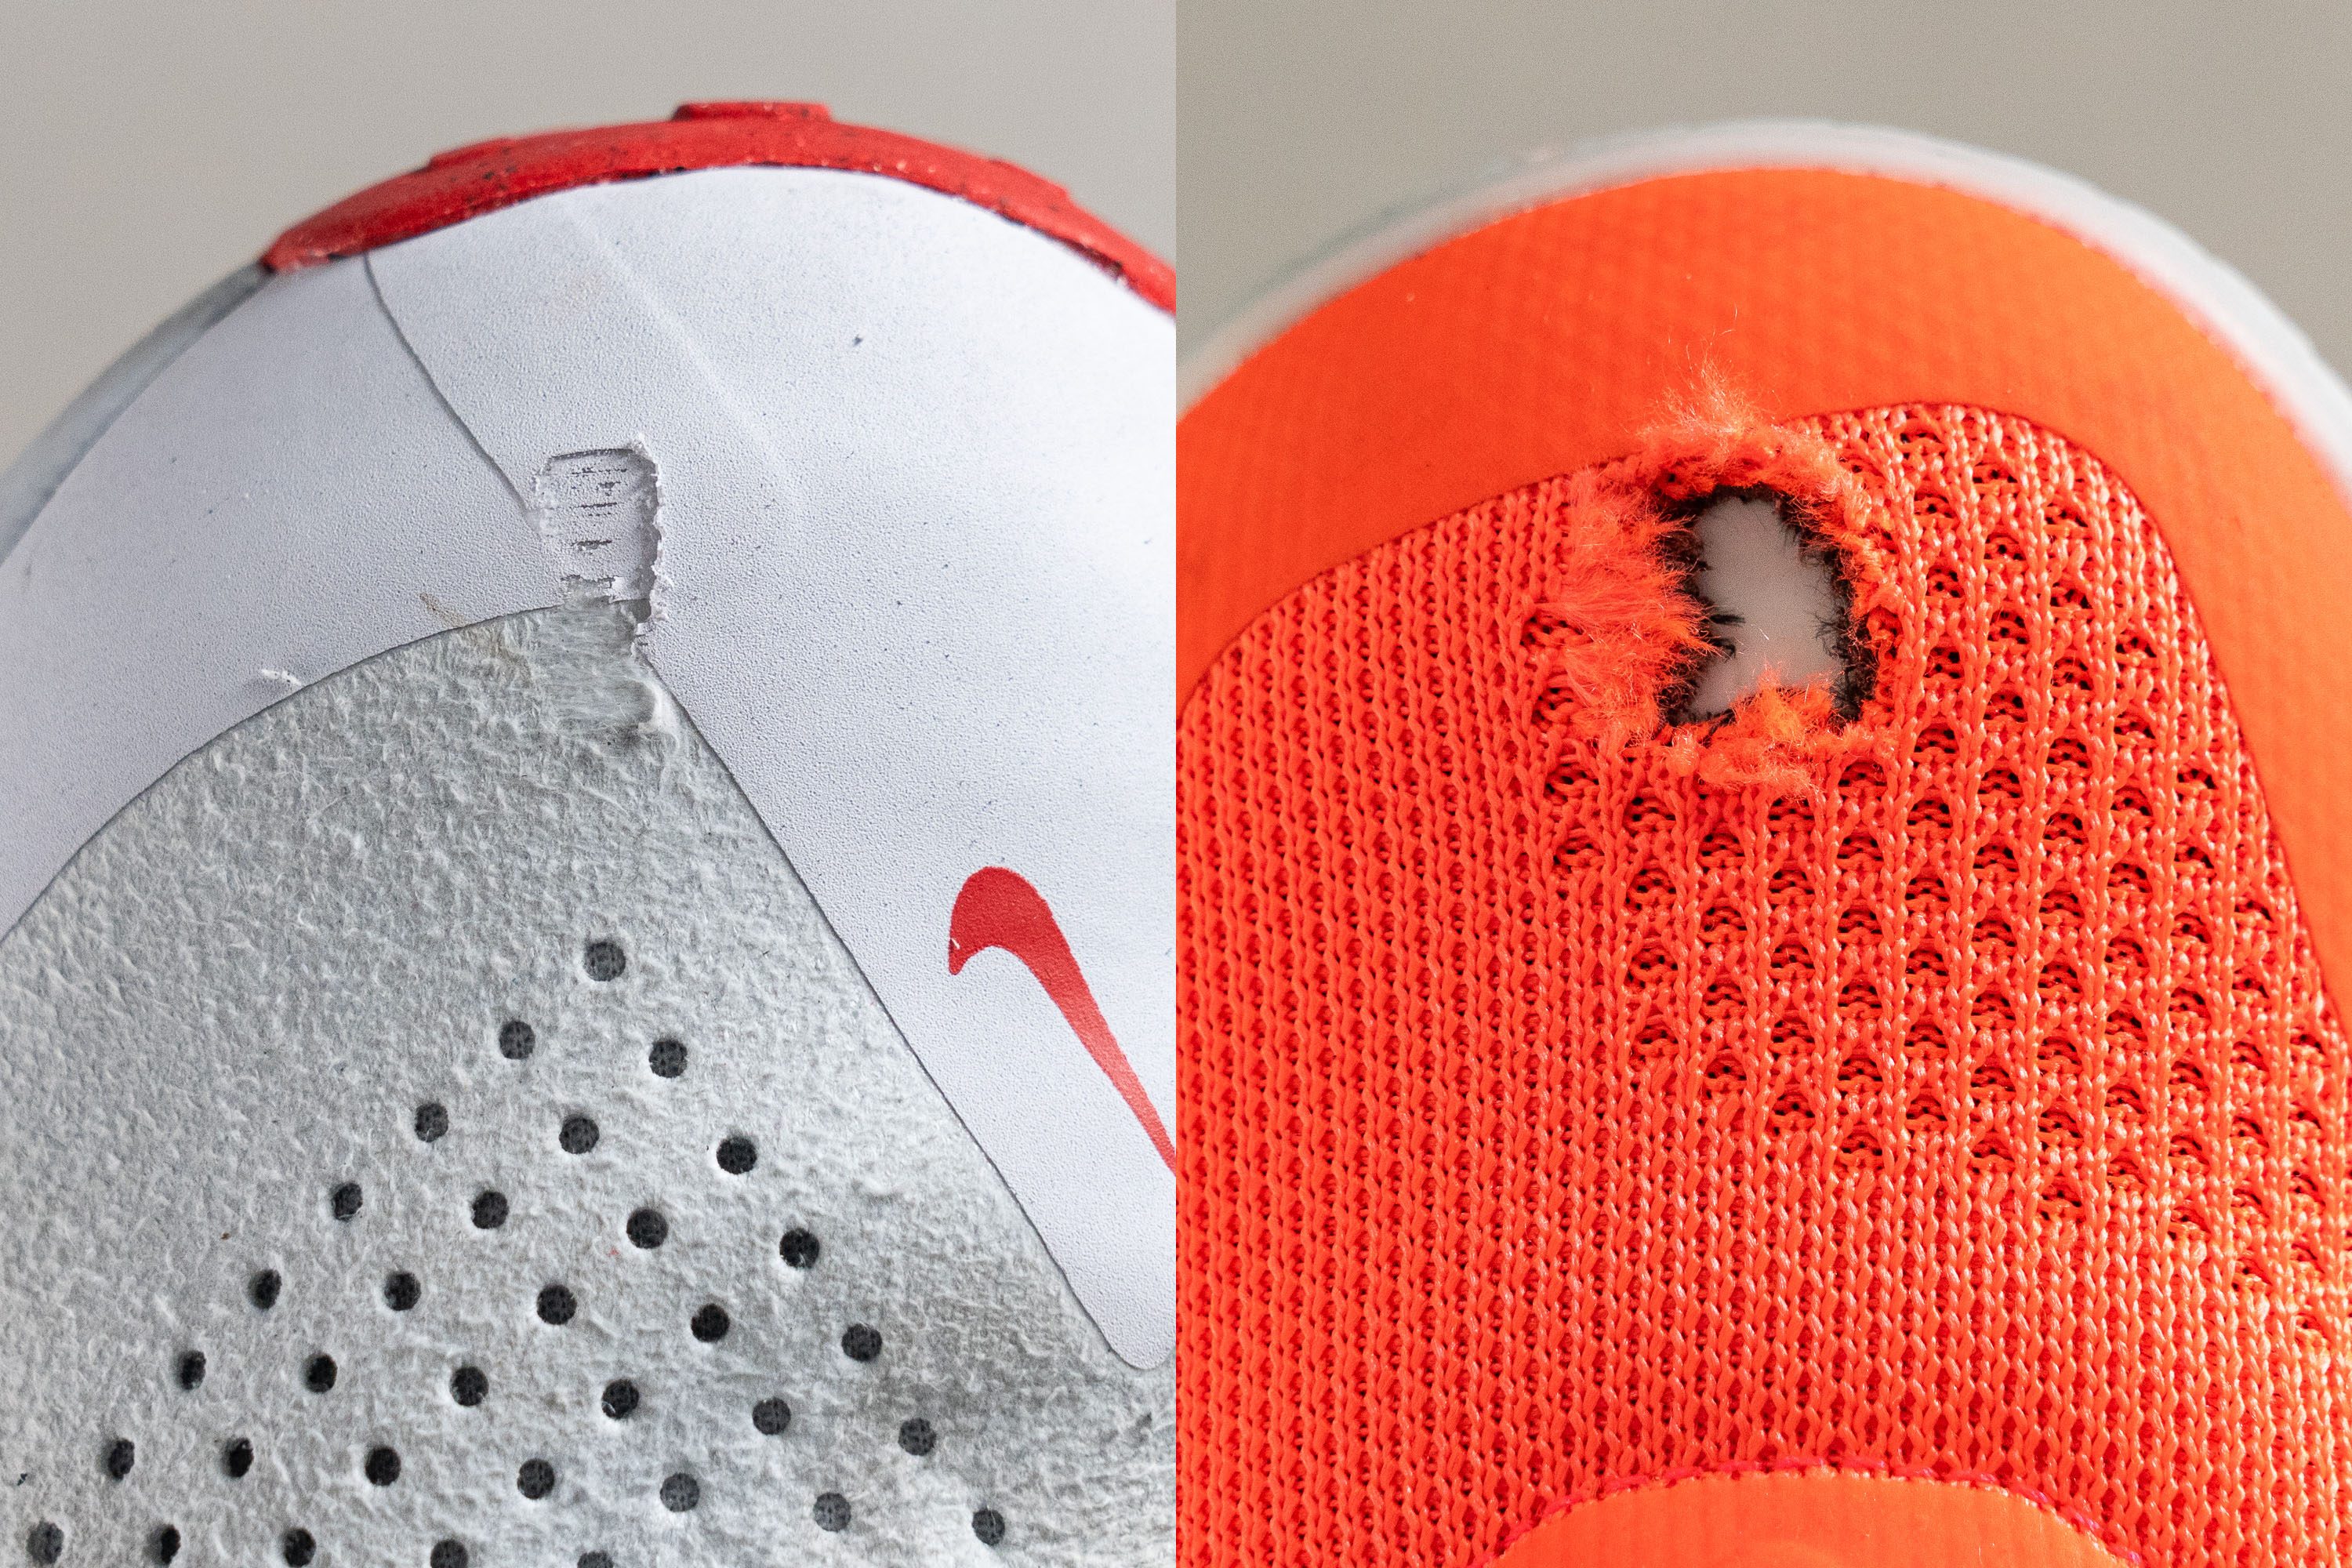 Nike Nike Free Flyknit Chukka Bright Crimson Ash Grey-Mineral Toebox durability